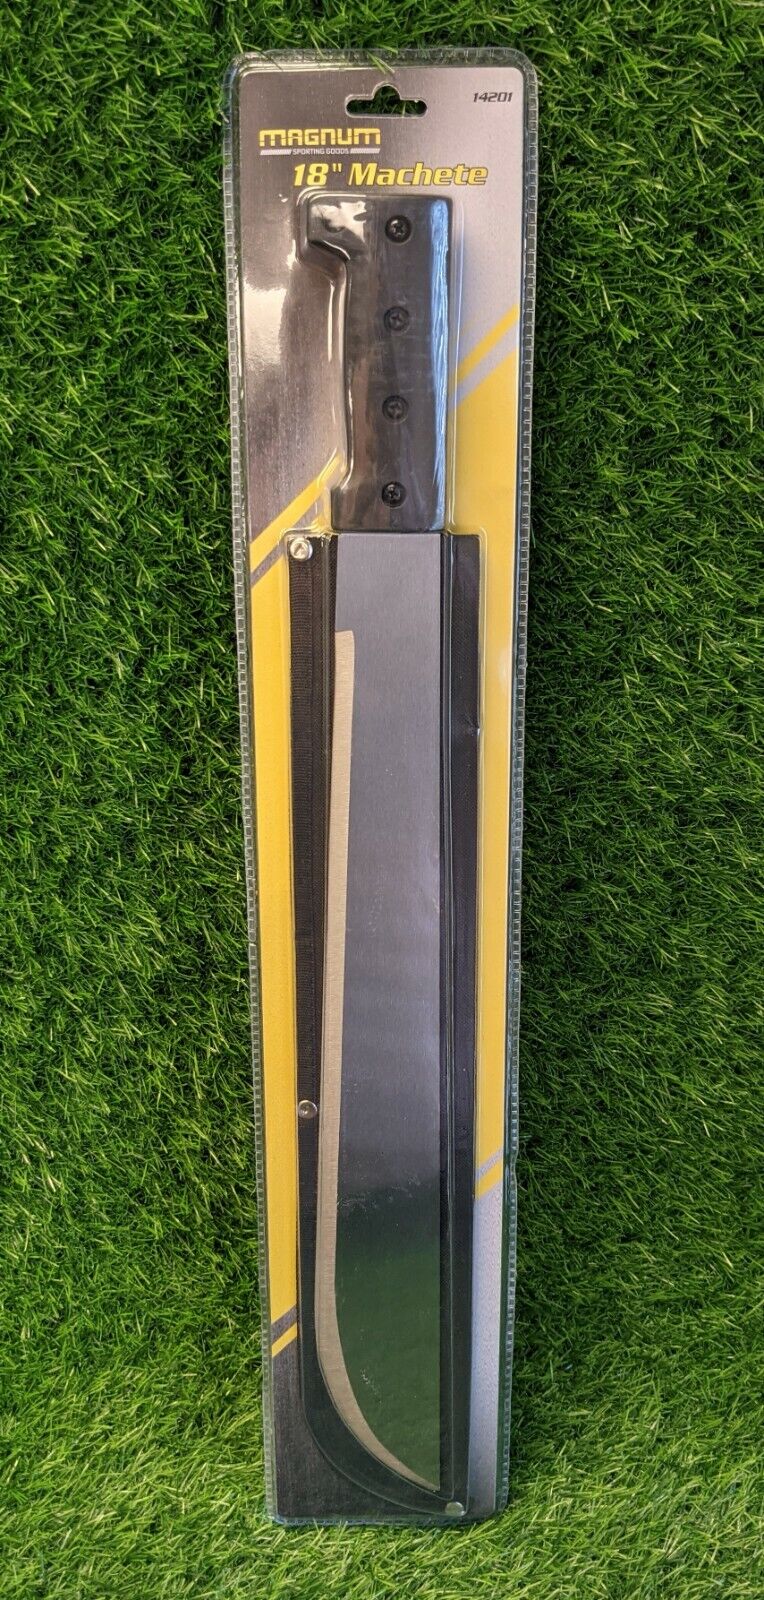 Magnum Sporting Goods Machete, 18" Blade, Non-slip Handle w/Sheath - 14201